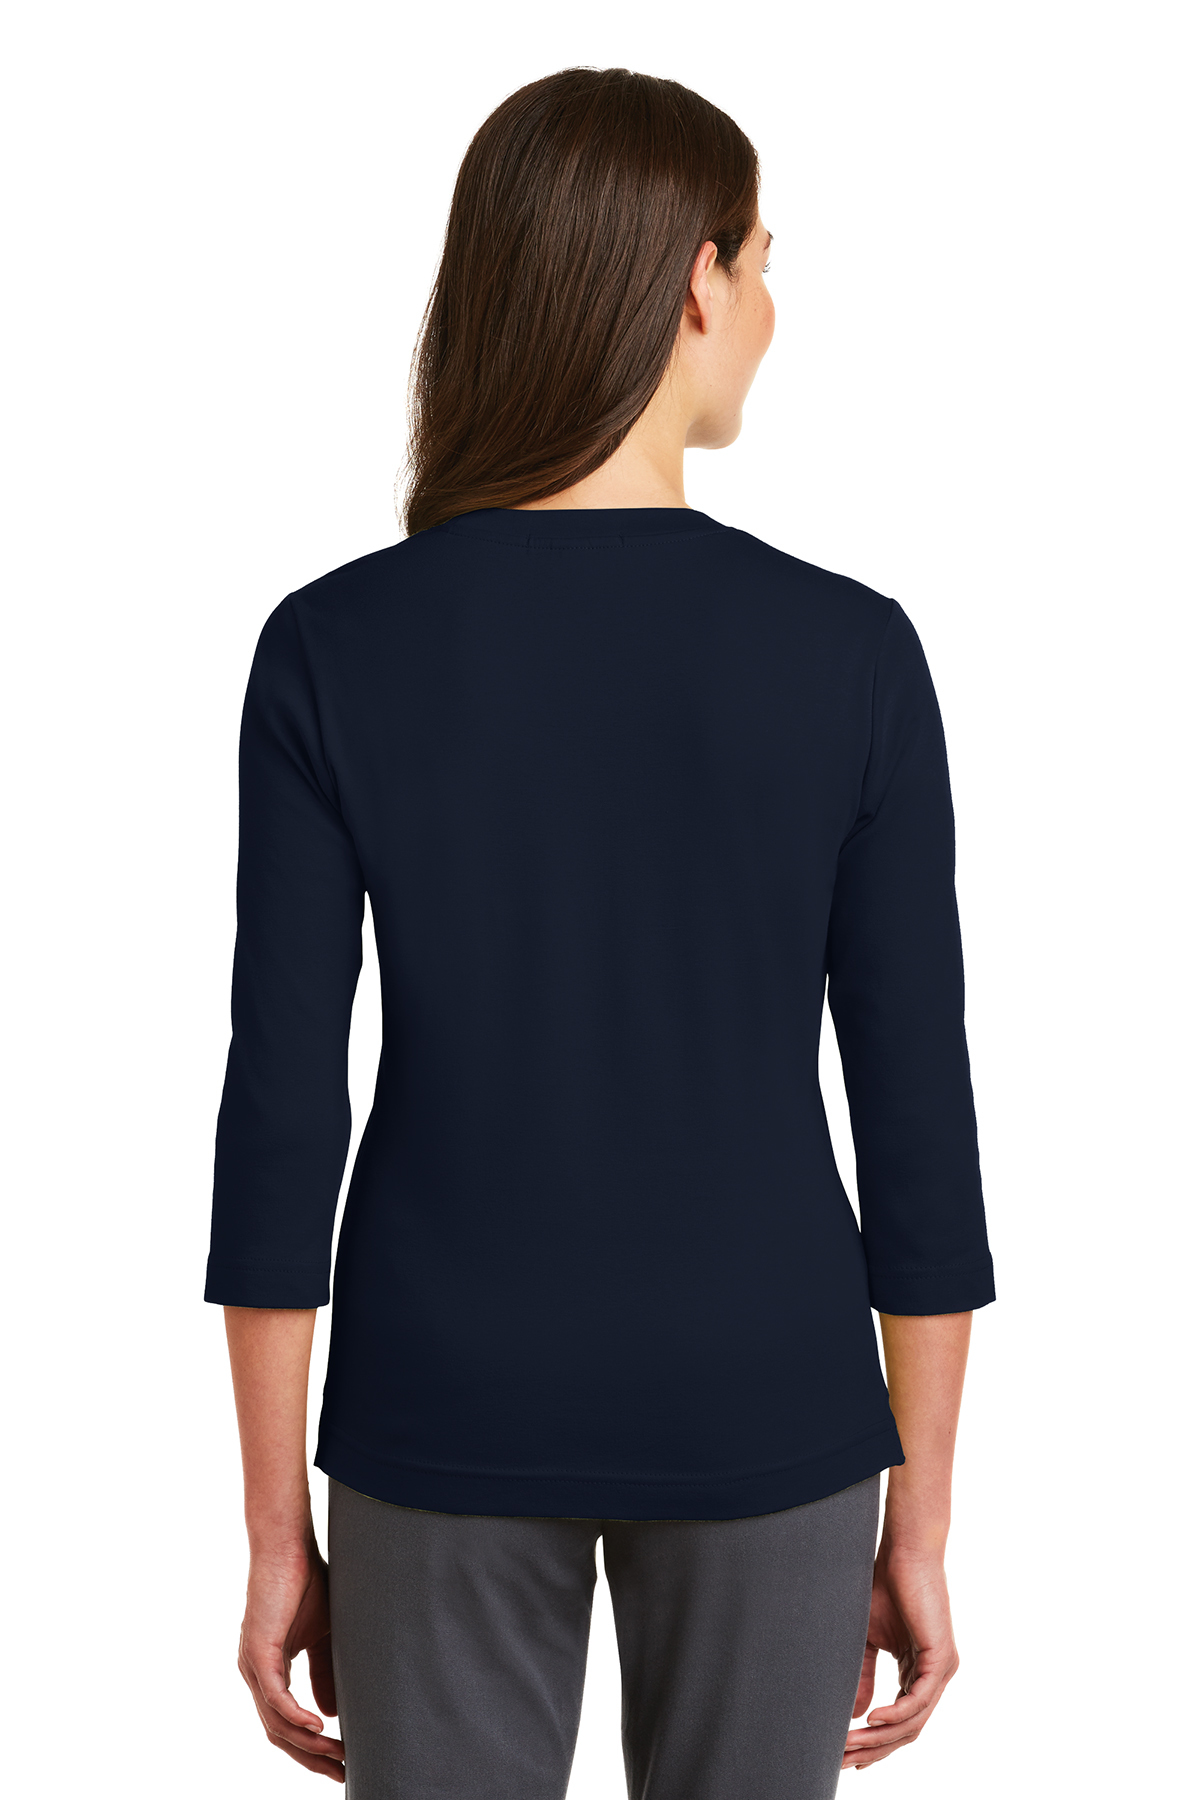 ASEIDFNSA Edgy Clothes for Women Long Women T Shirt Short Color